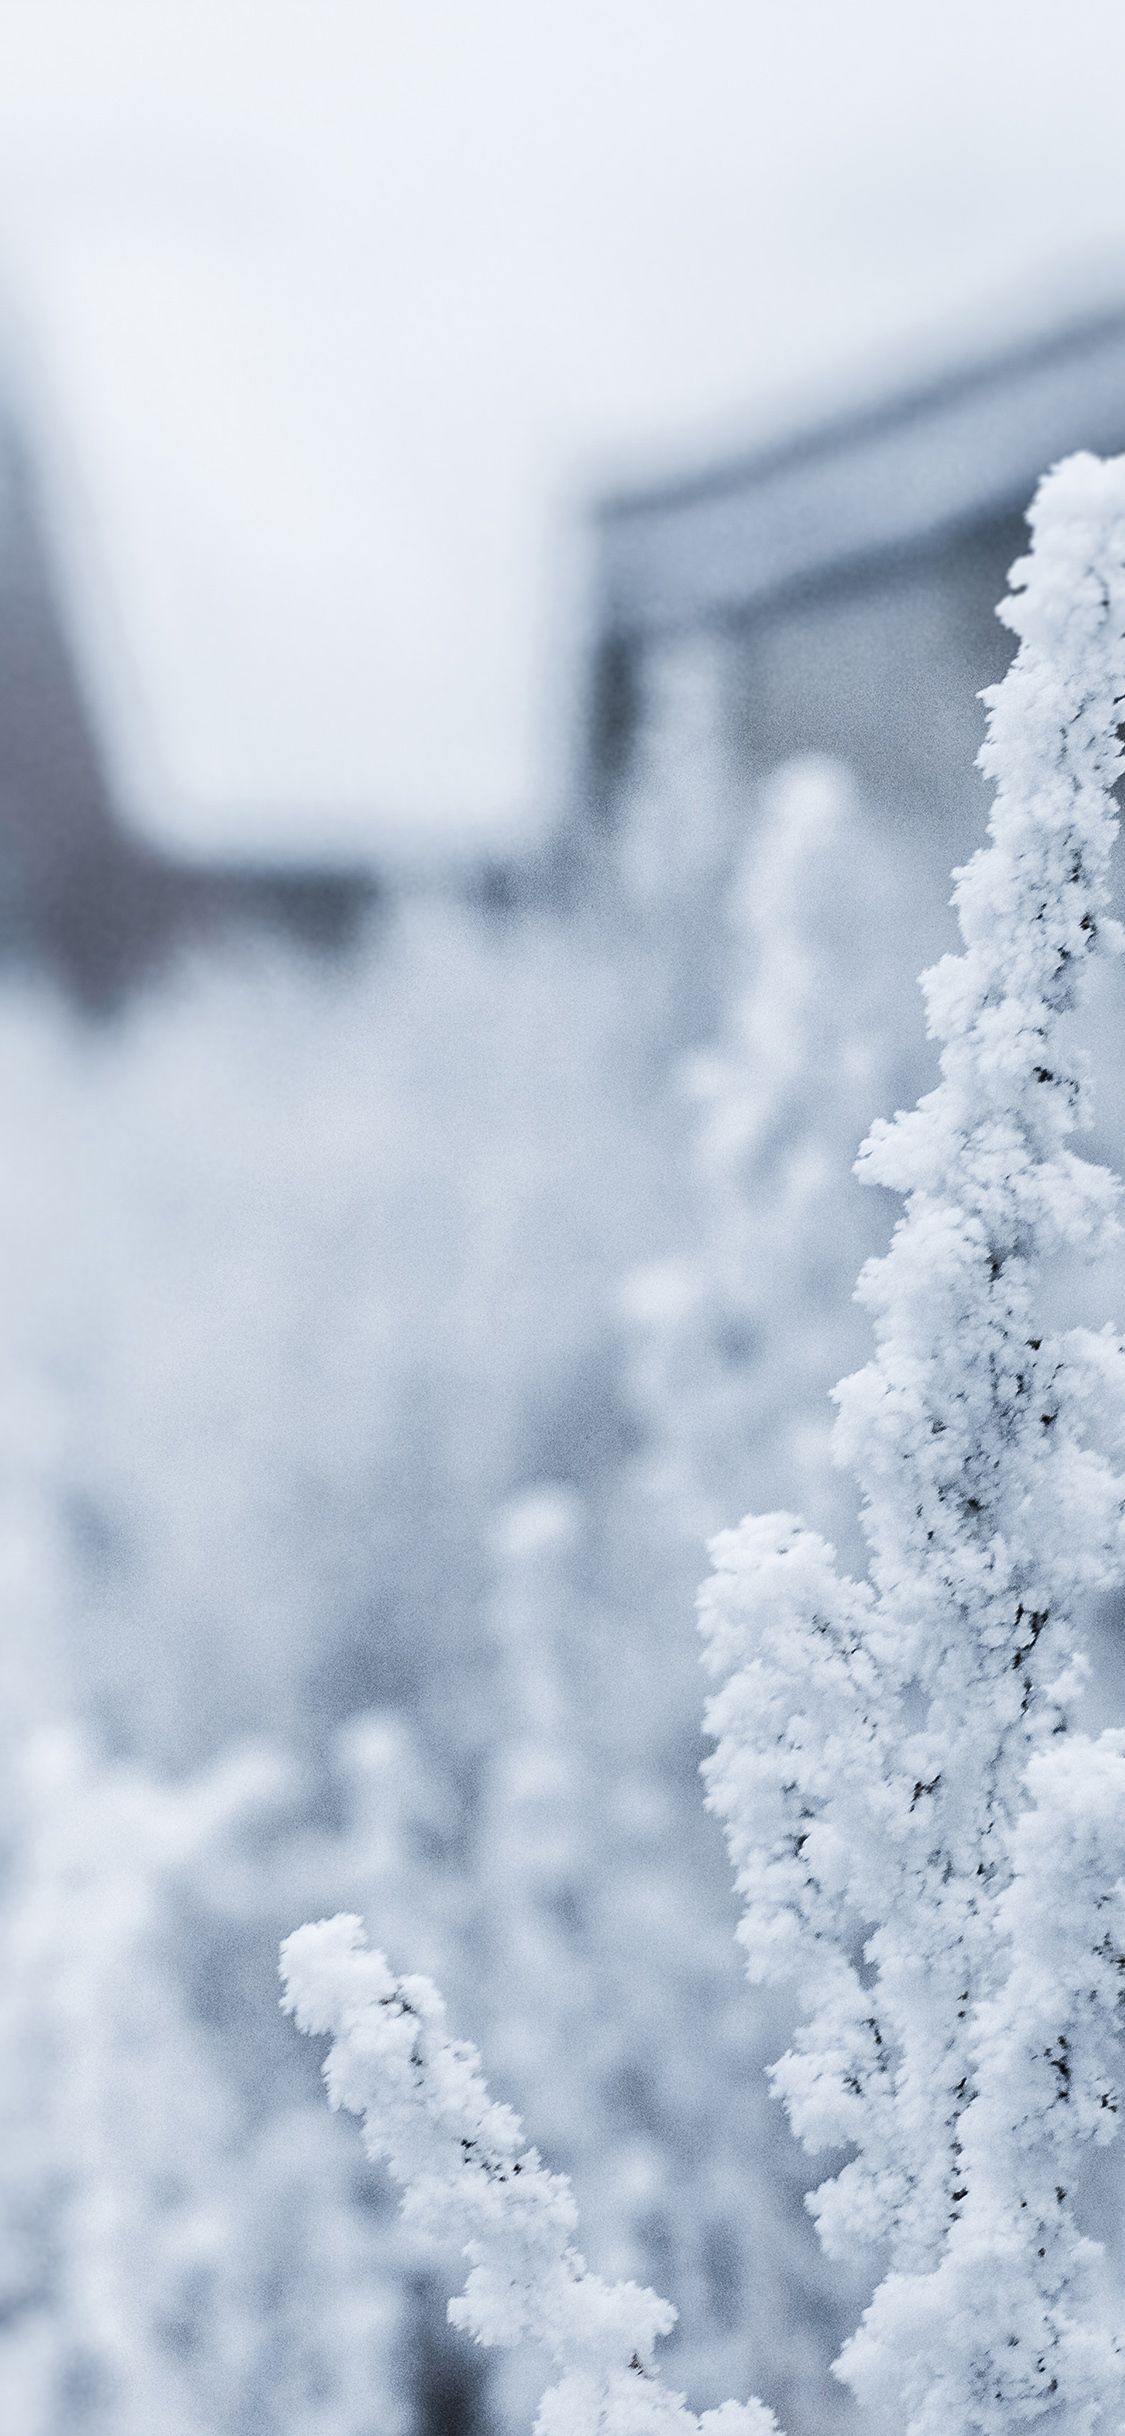 iPhone X wallpaper. snow white winter flower